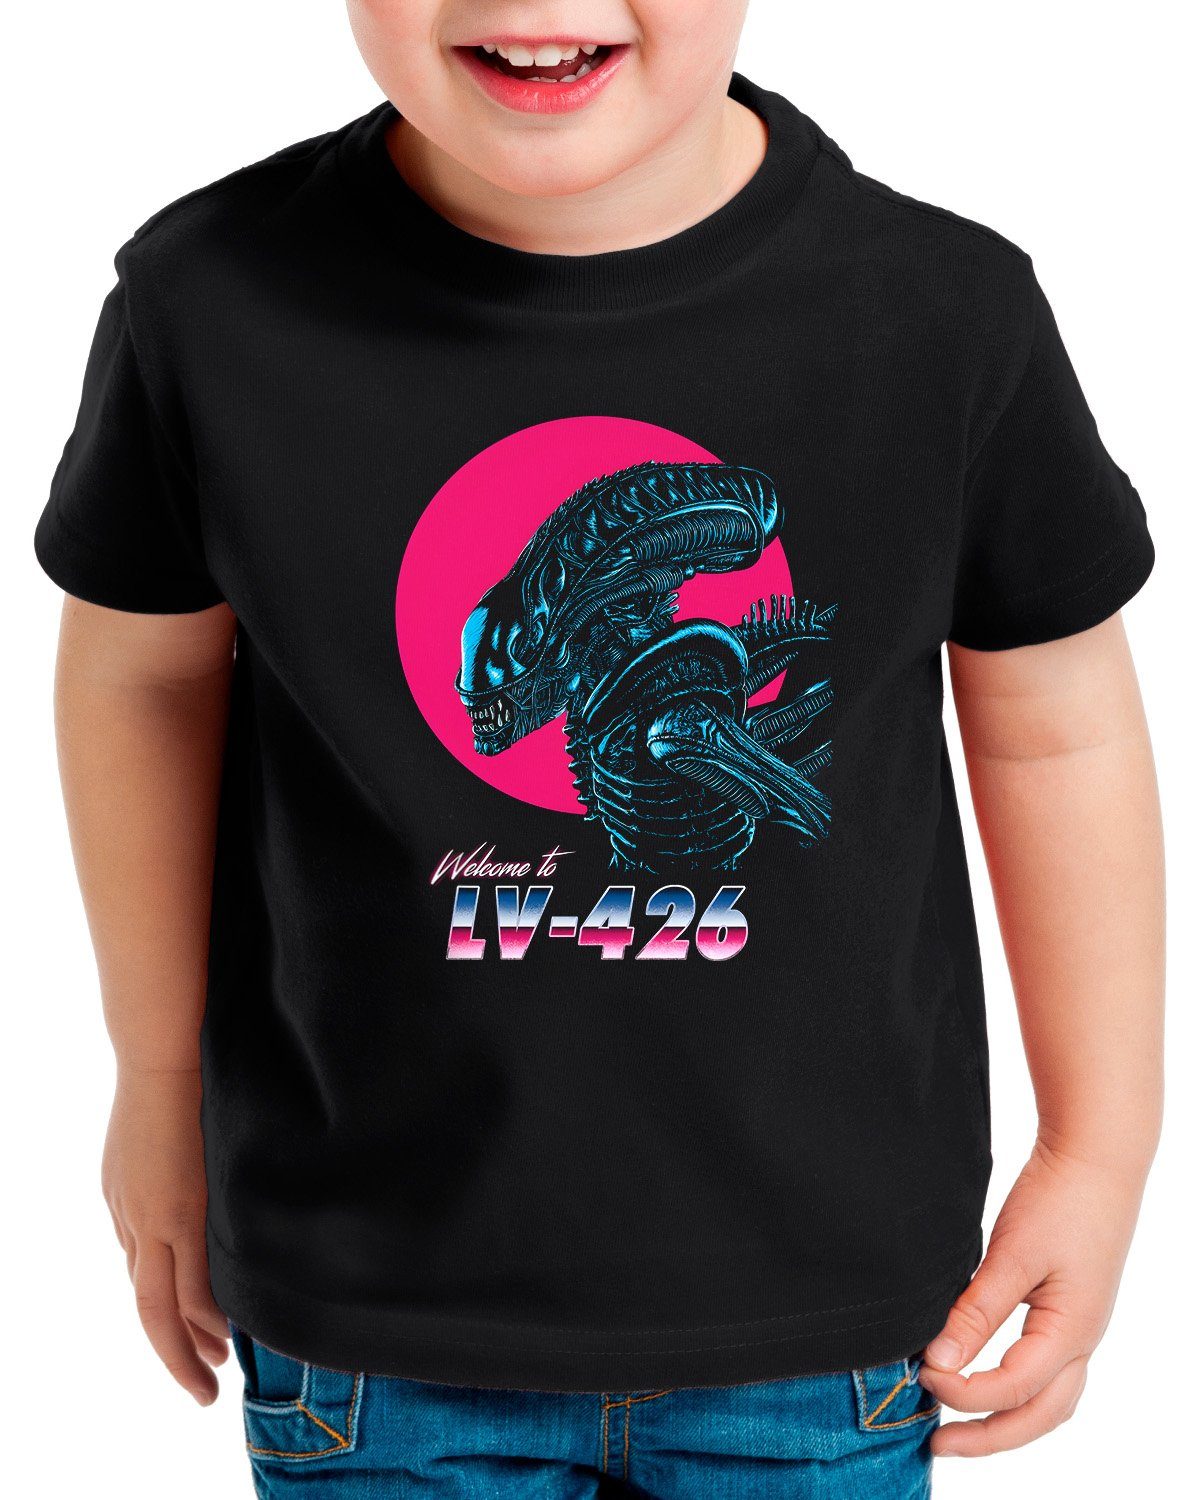 style3 Print-Shirt Kinder T-Shirt Come to LV-426 xenomorph alien ridley scott predator